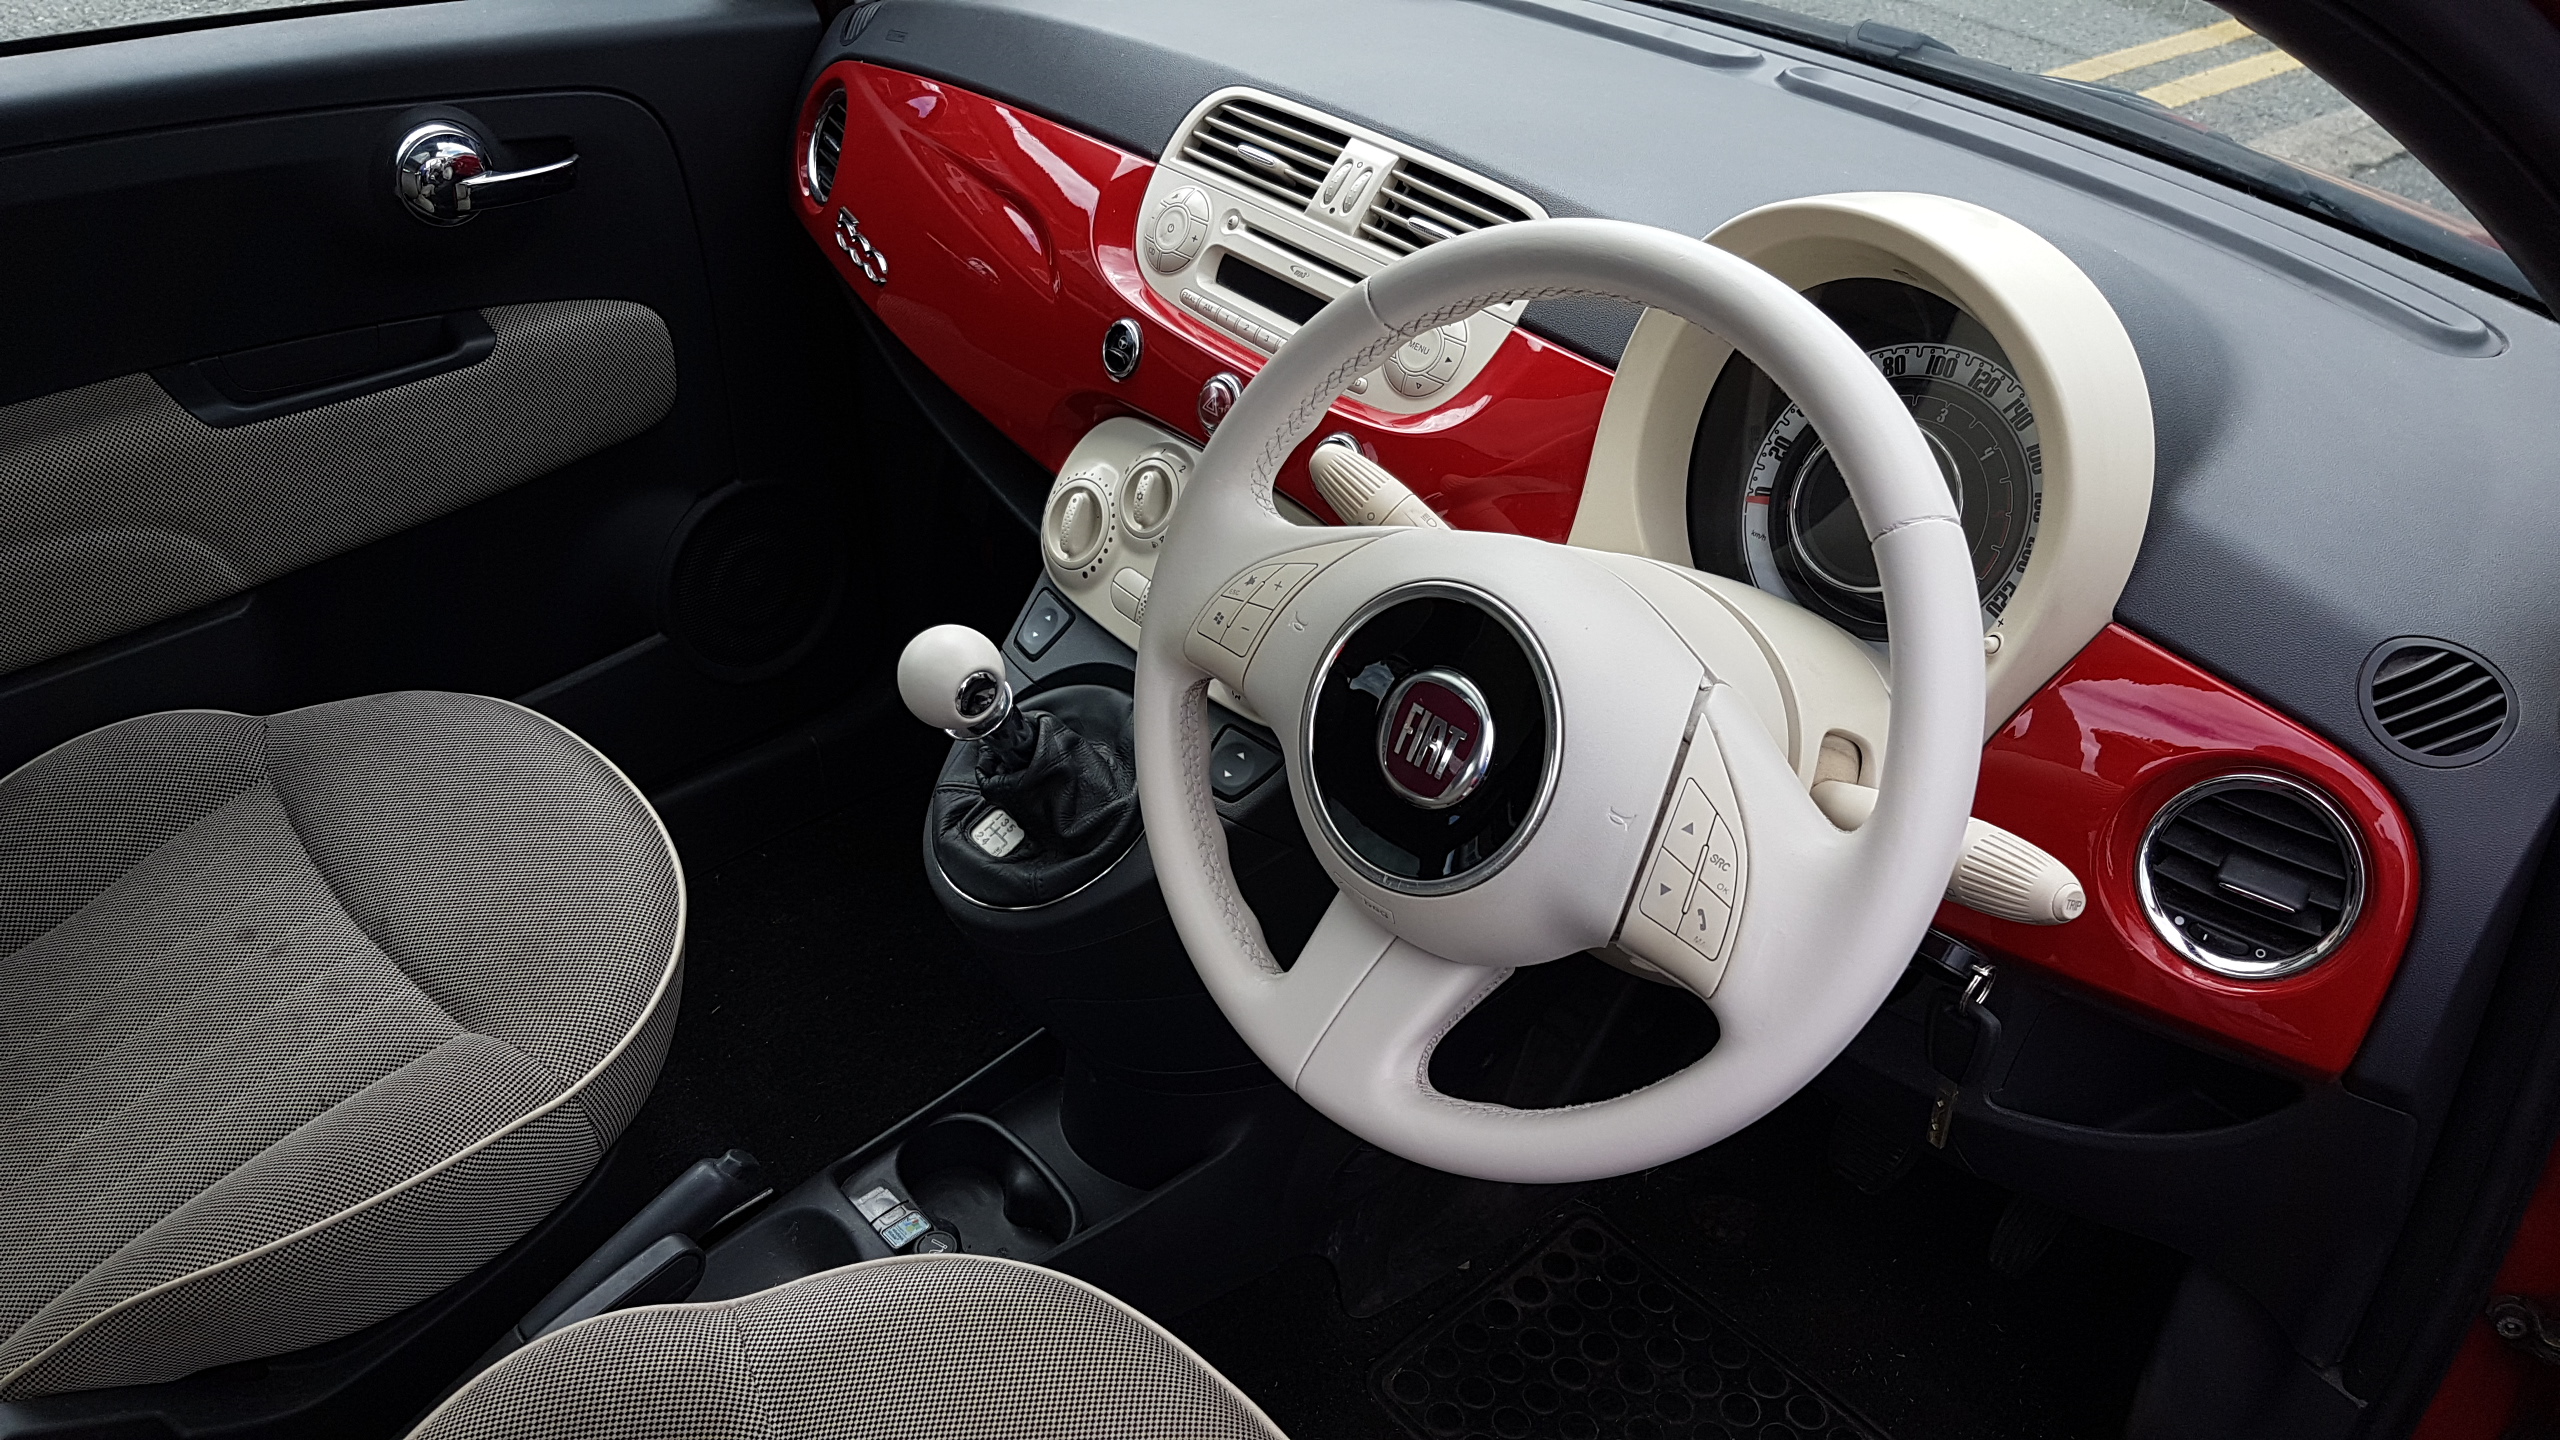 Fiat worn white steering wheel restored gear lever too